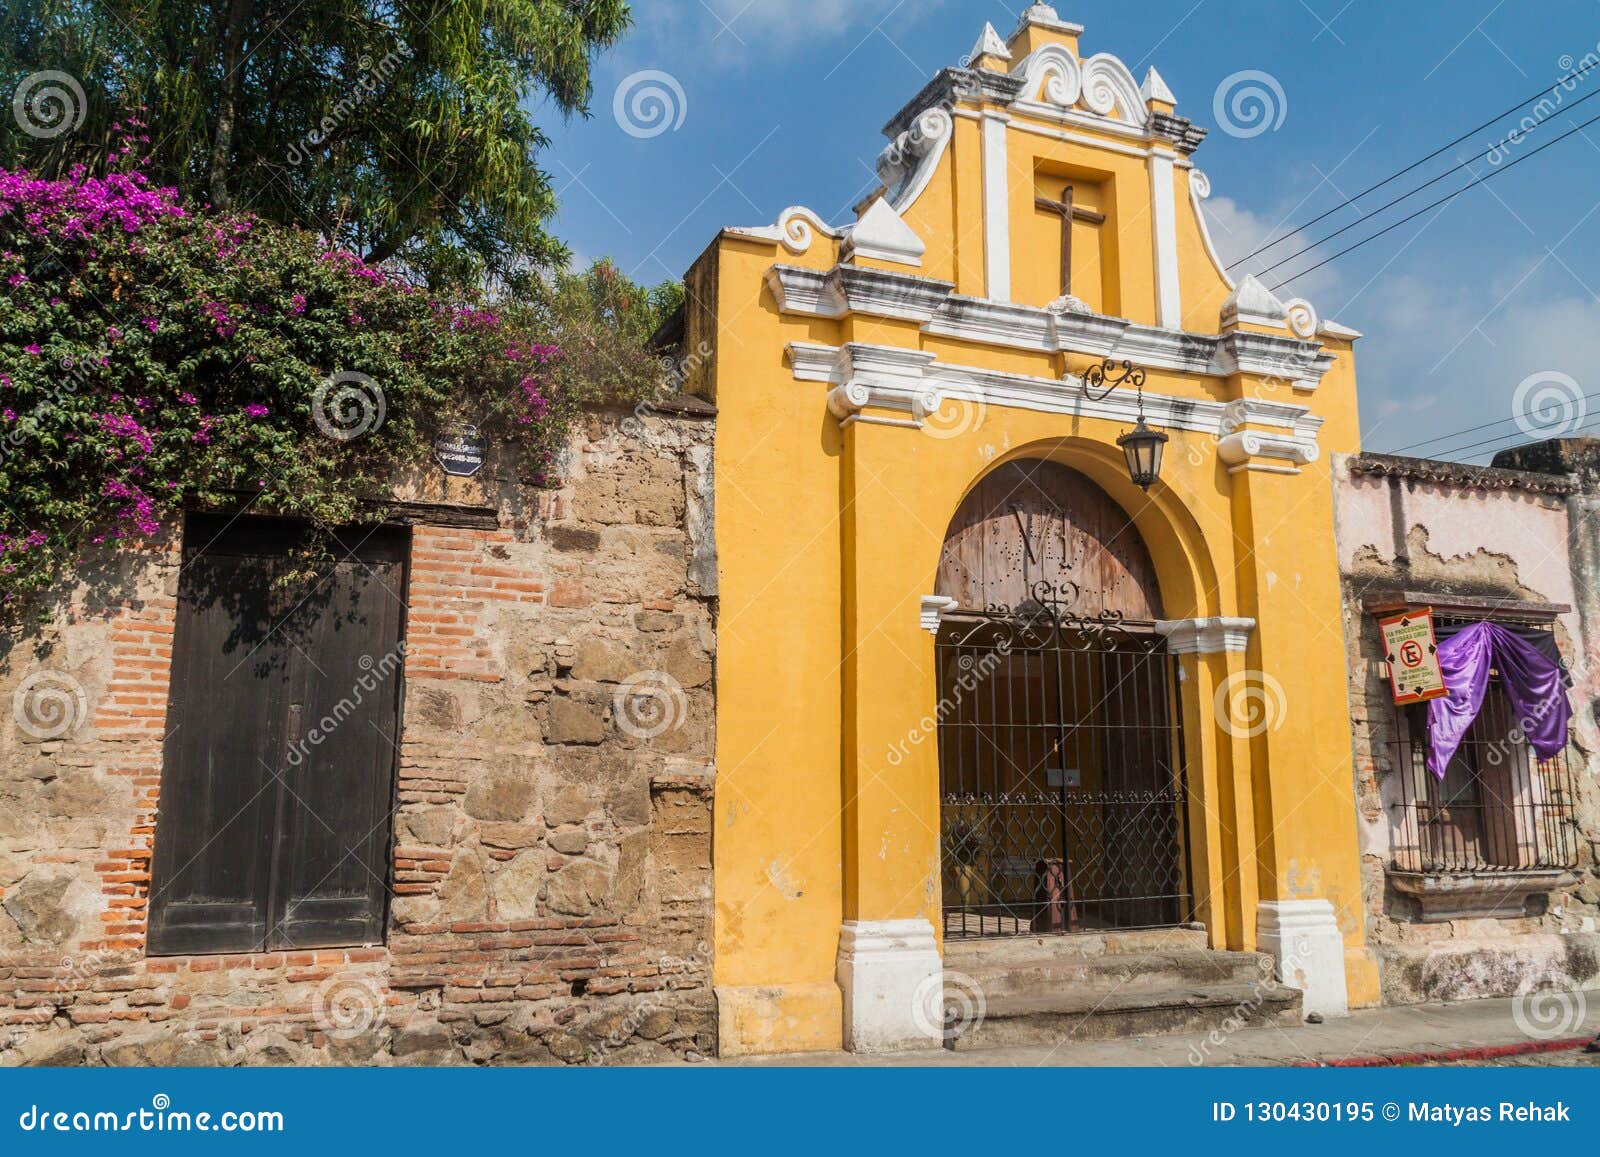 small chapel on calle de los pasos street in antigua guatemala town, guatemal